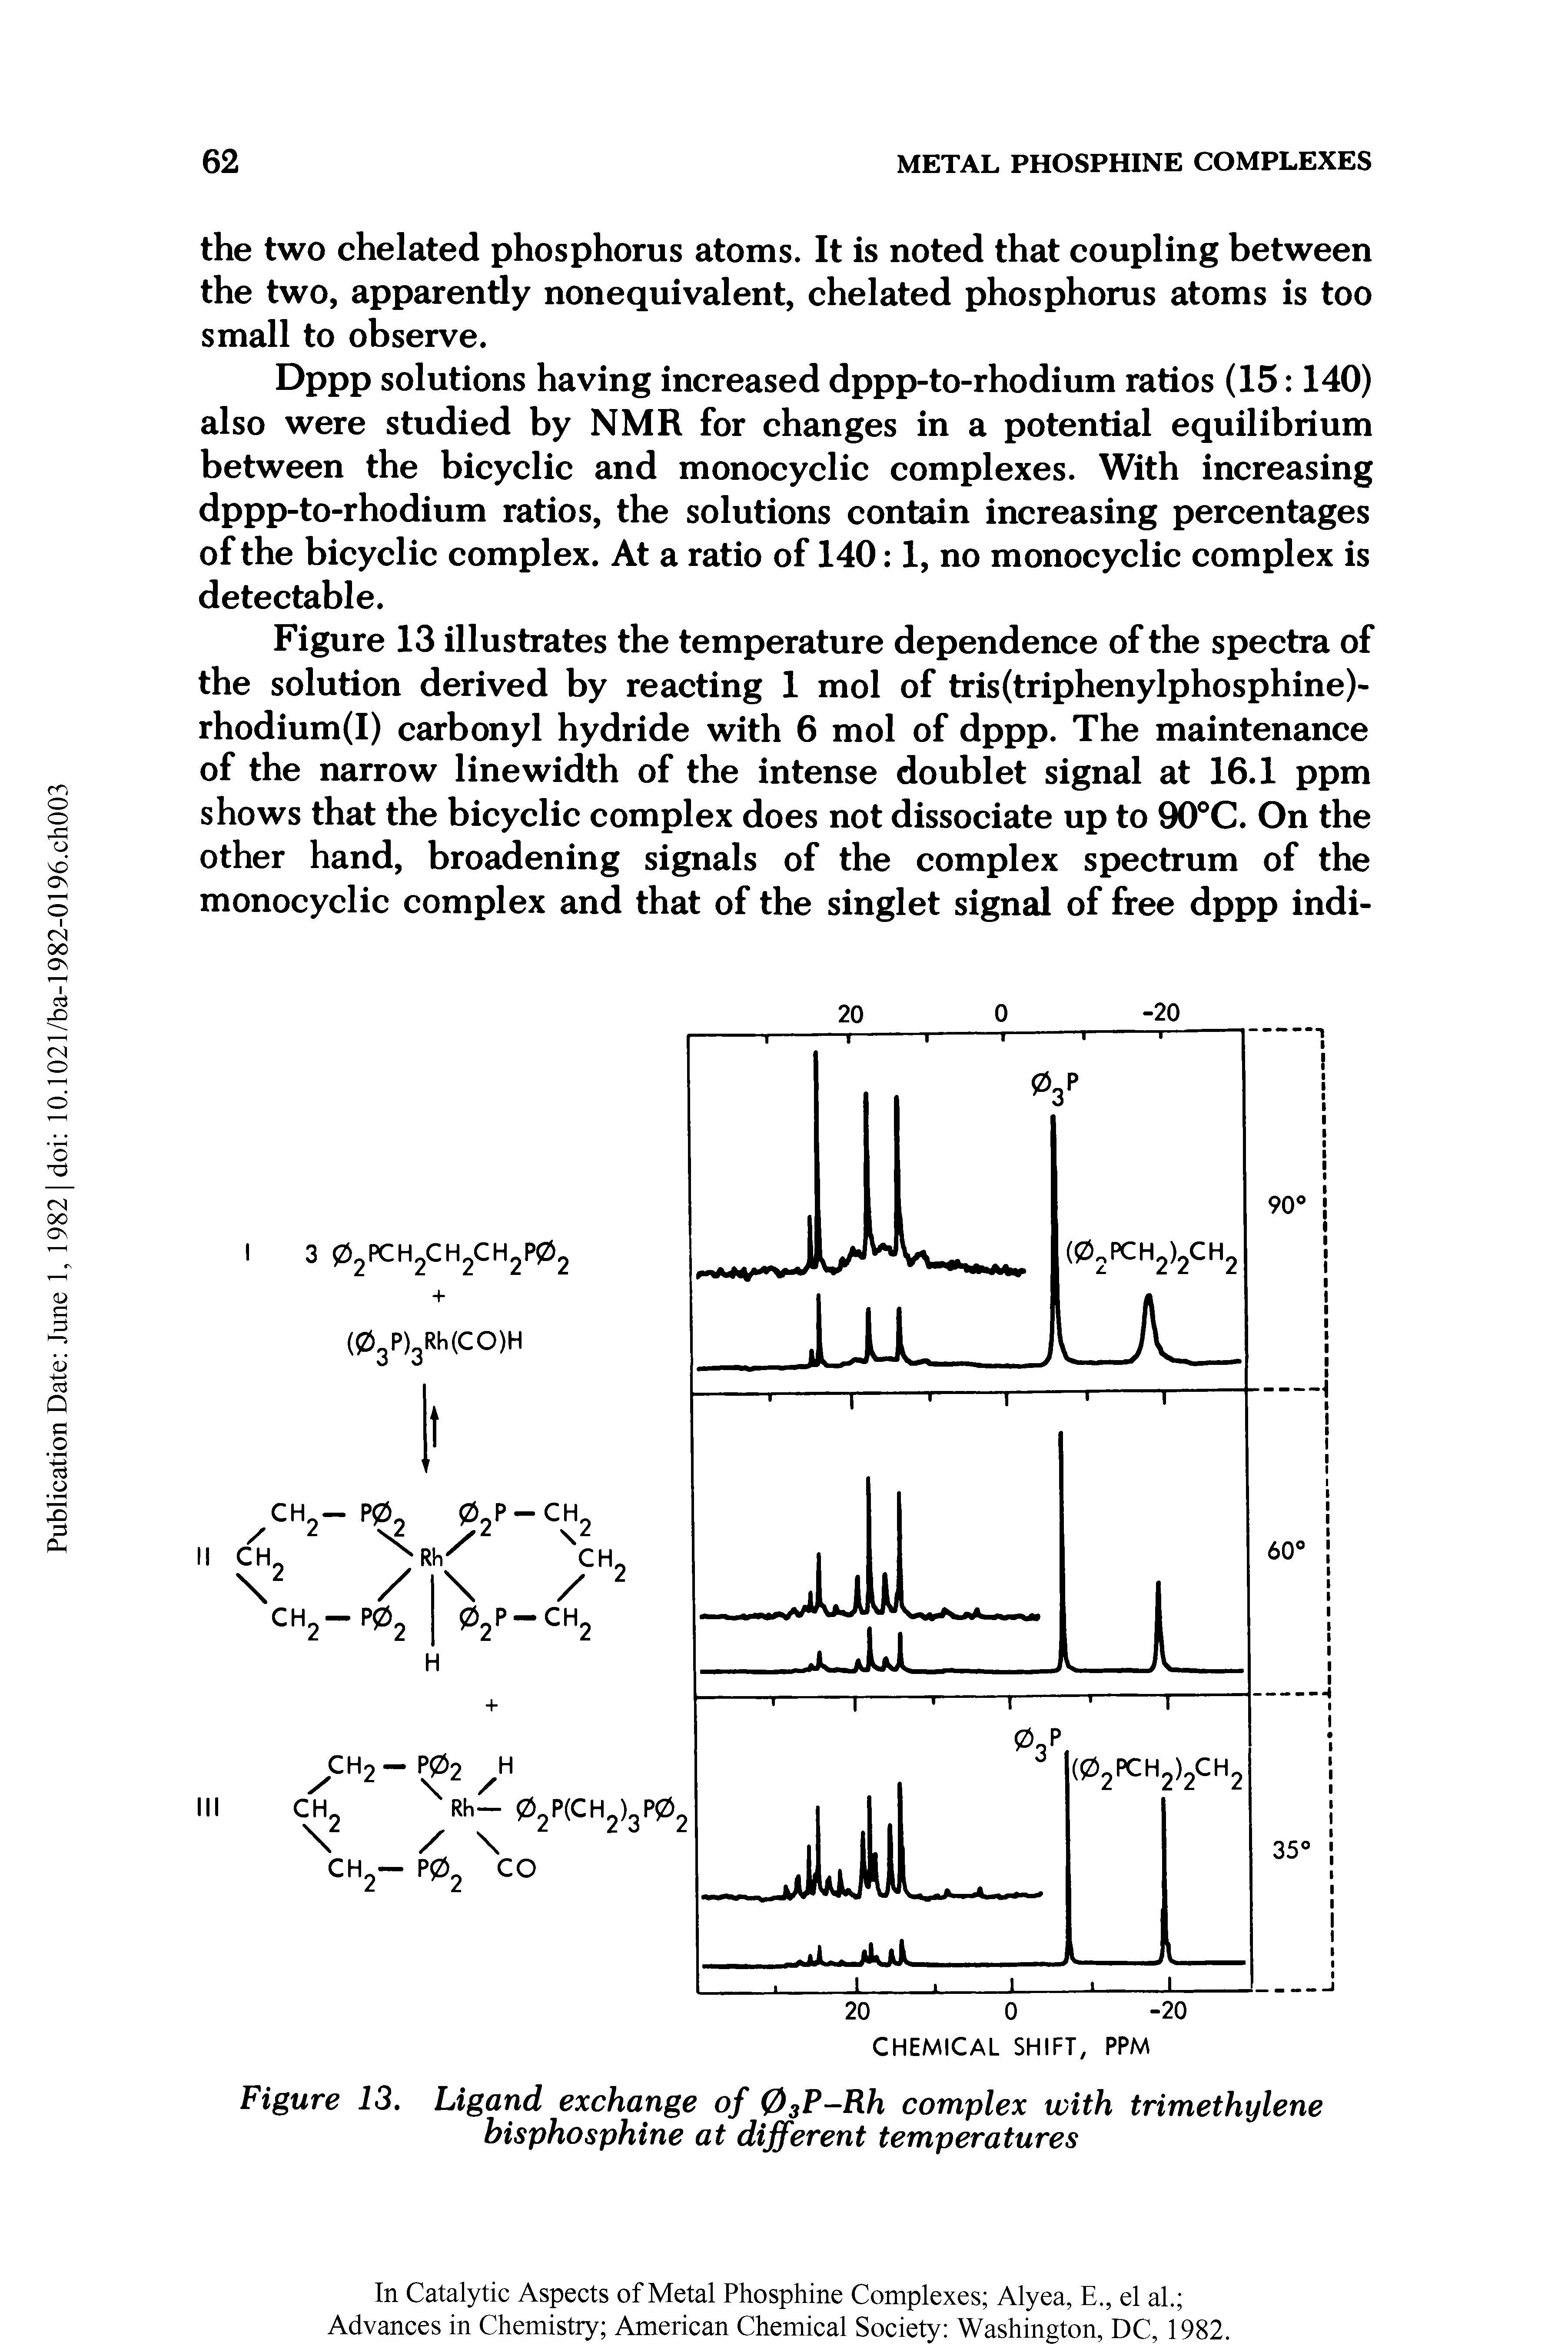 Figure 13. Ligand exchange of 03P-Rh complex with trimethylene bisphosphine at different temperatures...